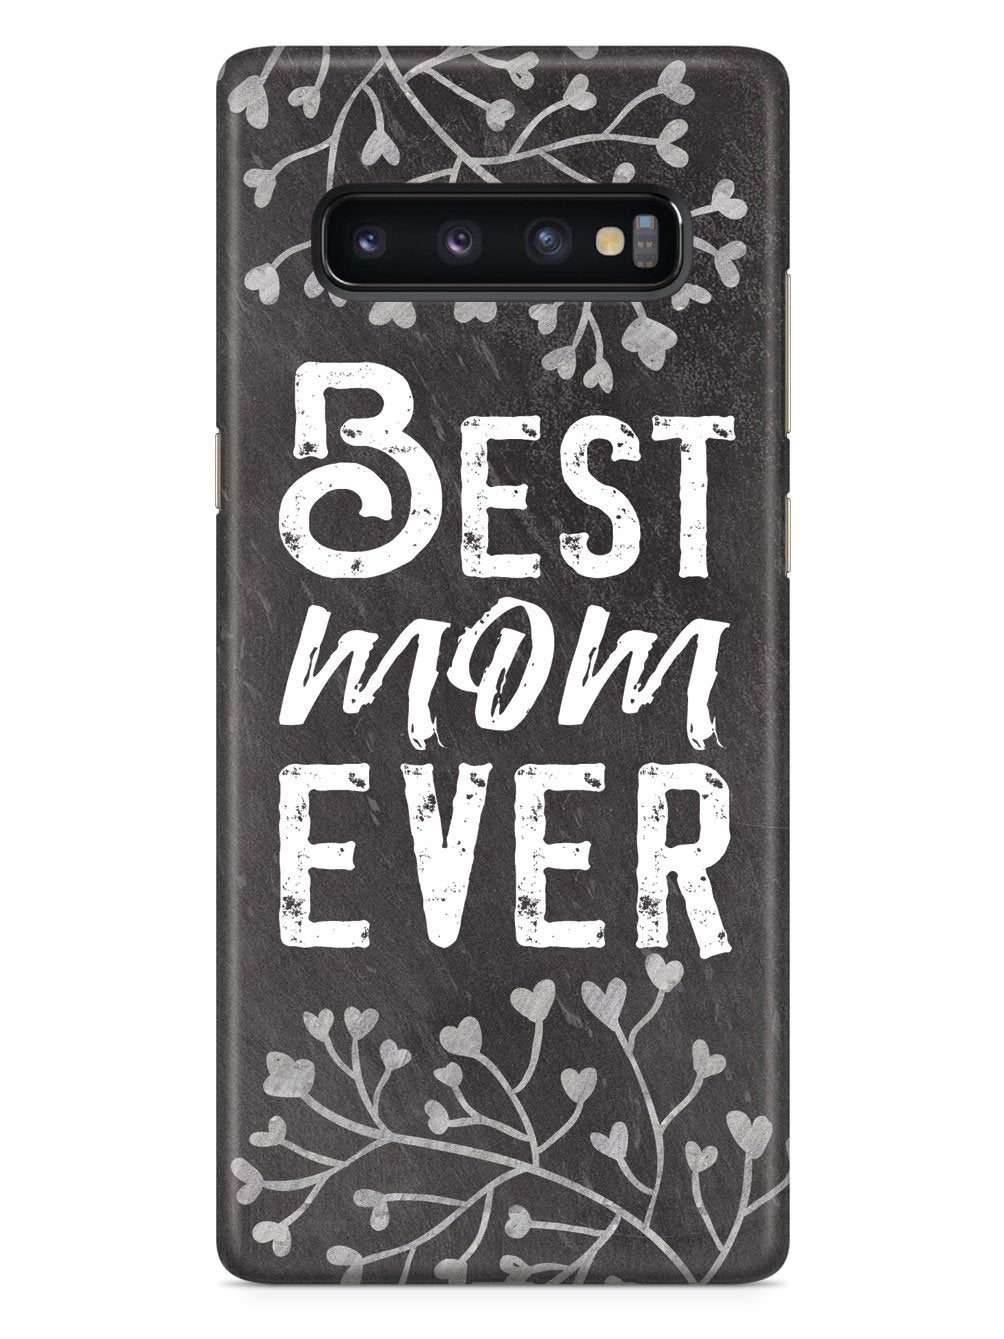 Best Mom Ever - Chalkboard Type - Black Case